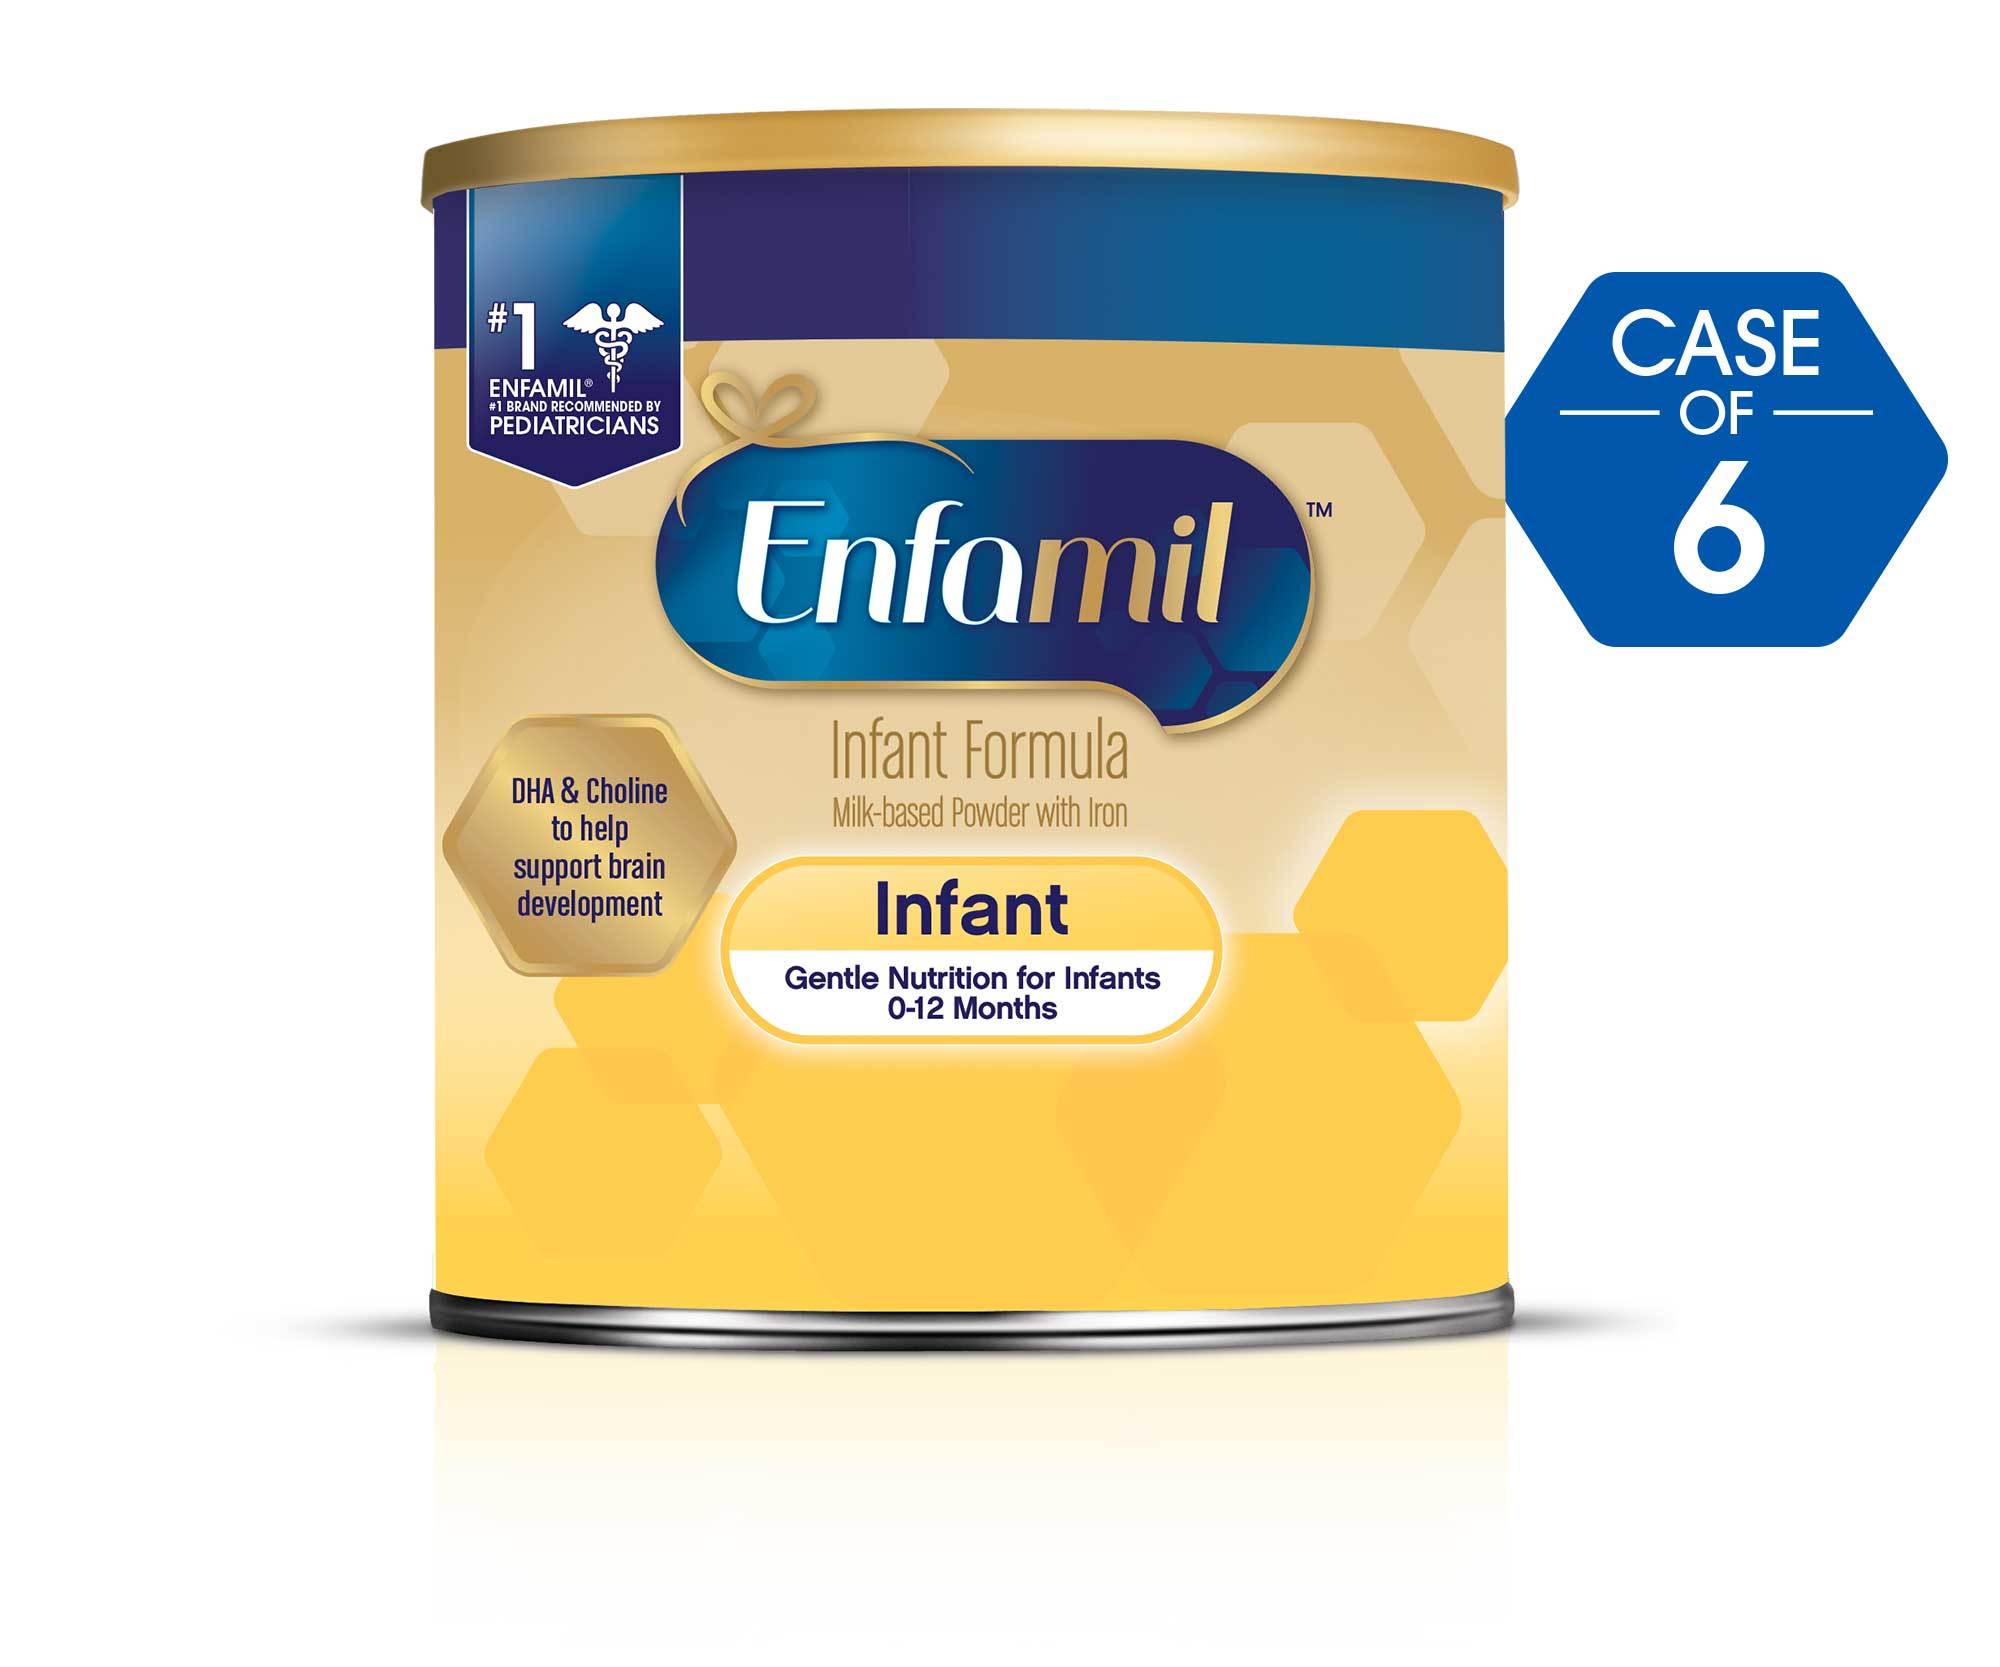 Enfamil Logo - Enfamil Infant Formula, Powder, 12.5 oz Can (Case of 6)